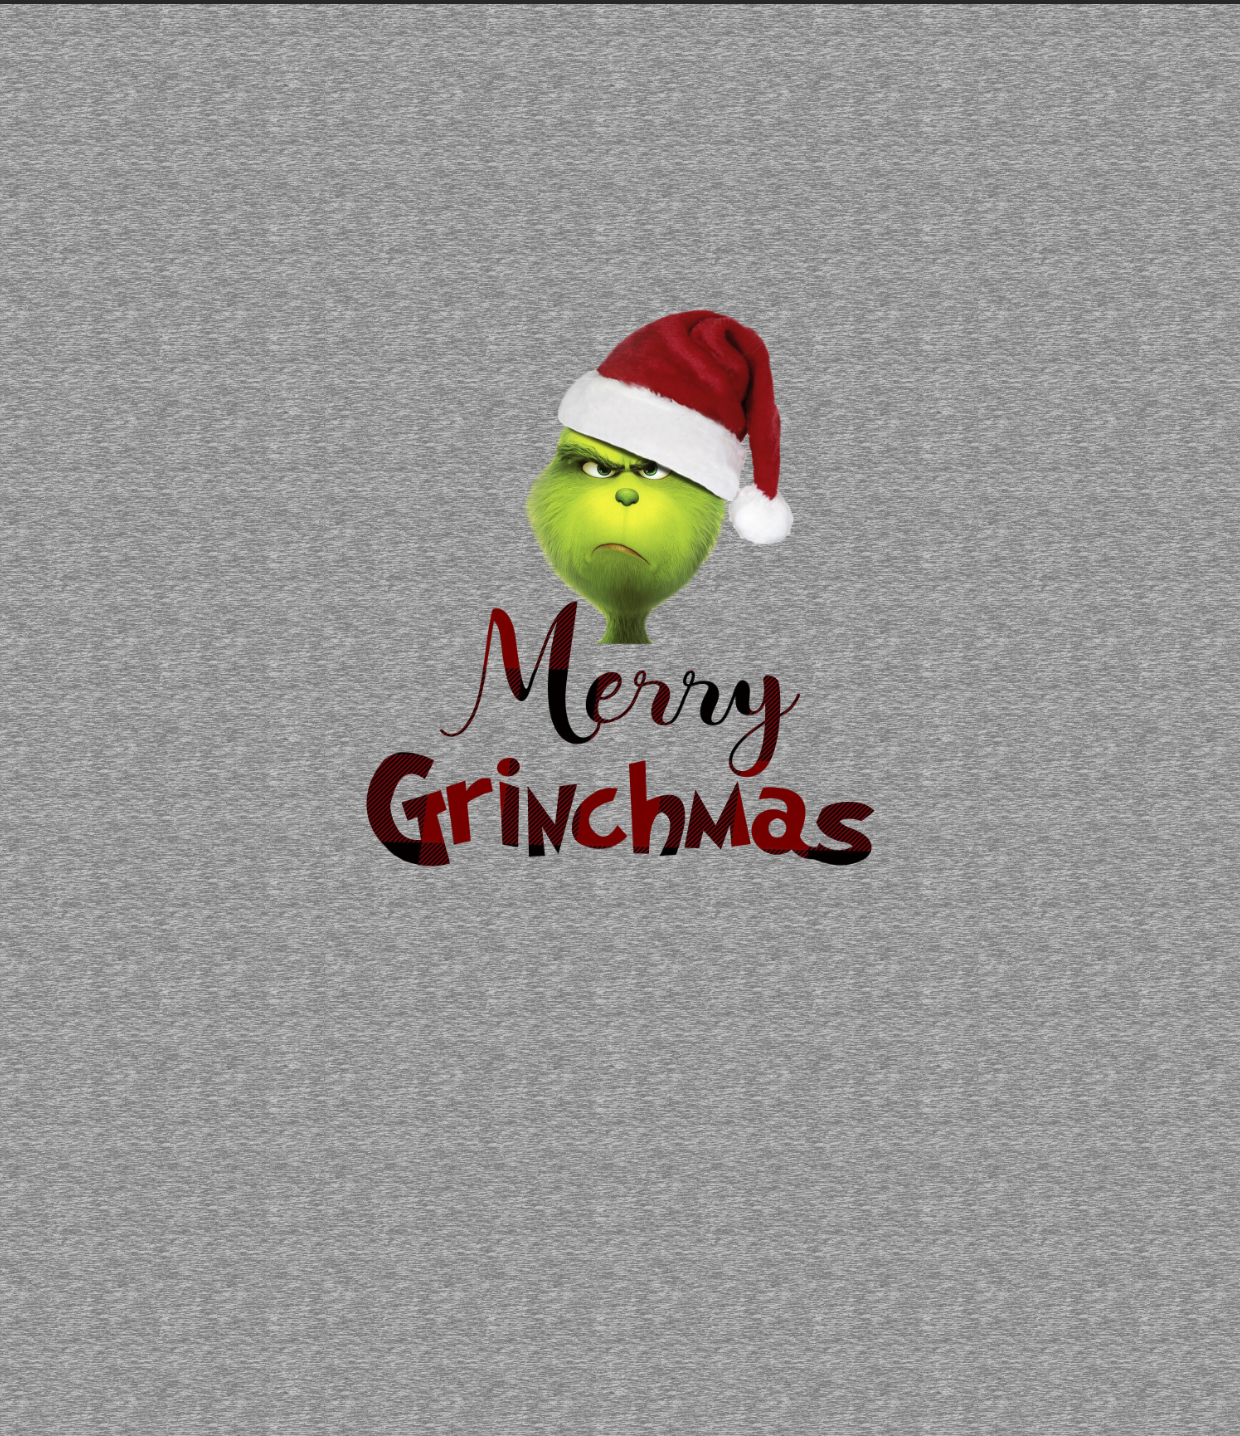 ***Merry Grinchmas